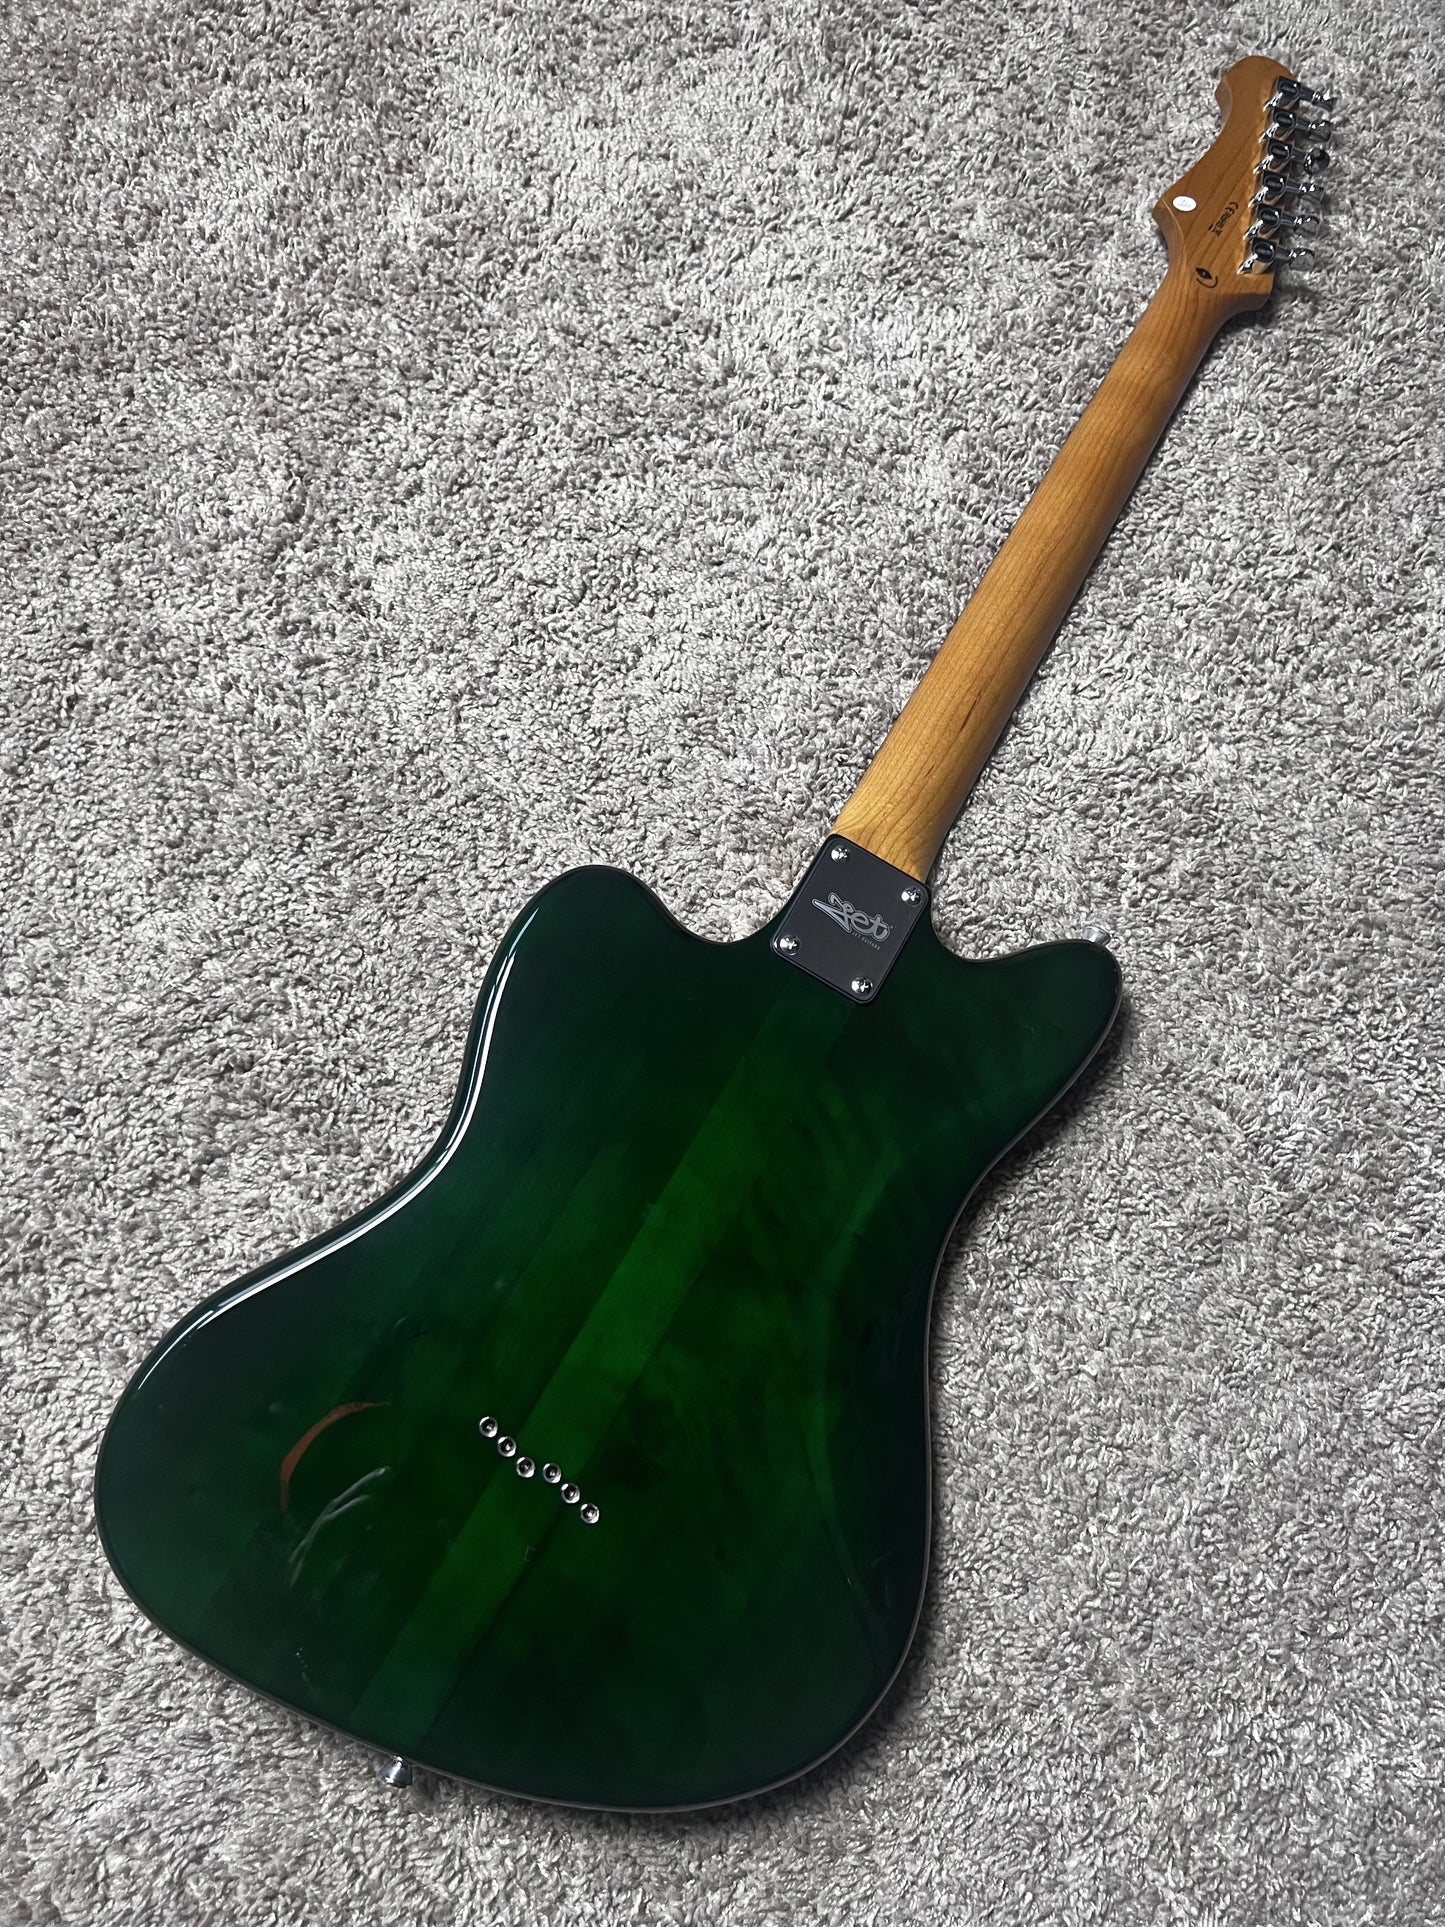 Electric Guitar Jet Guitars JJ350 GR R Green Free Setup